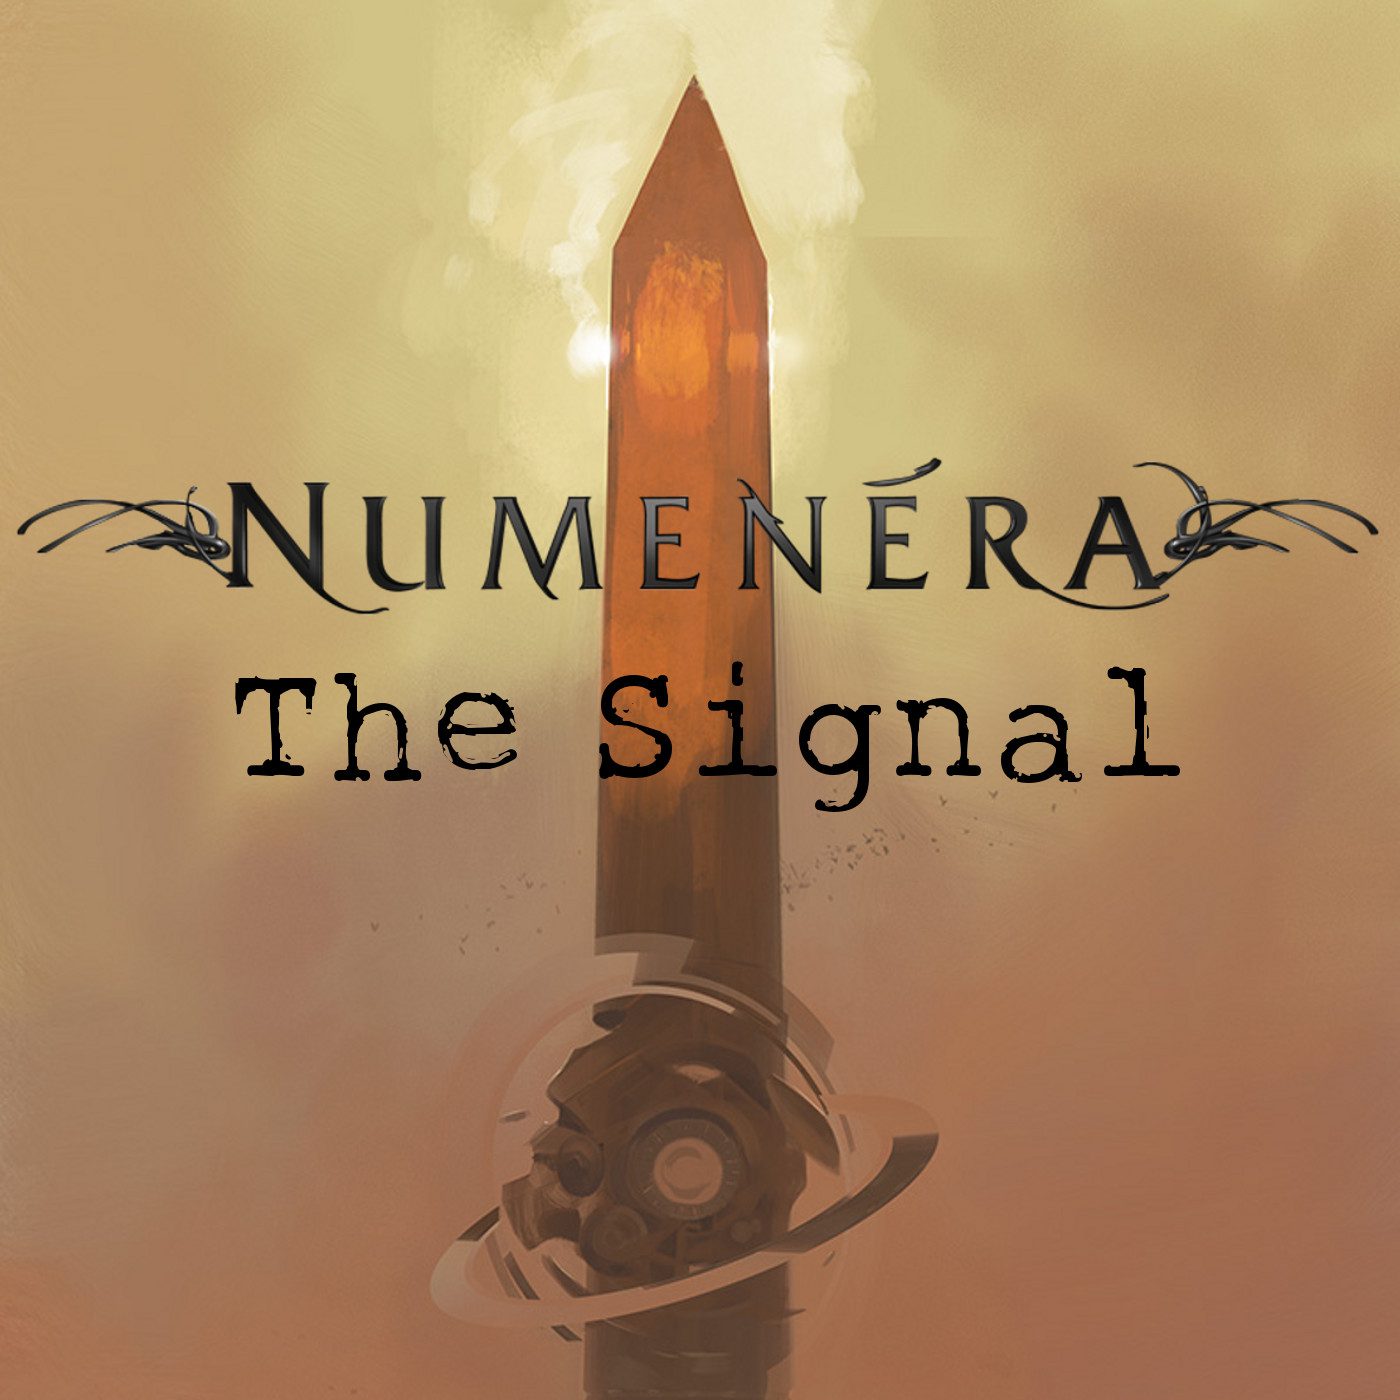 Numenera: The Signal Podcast